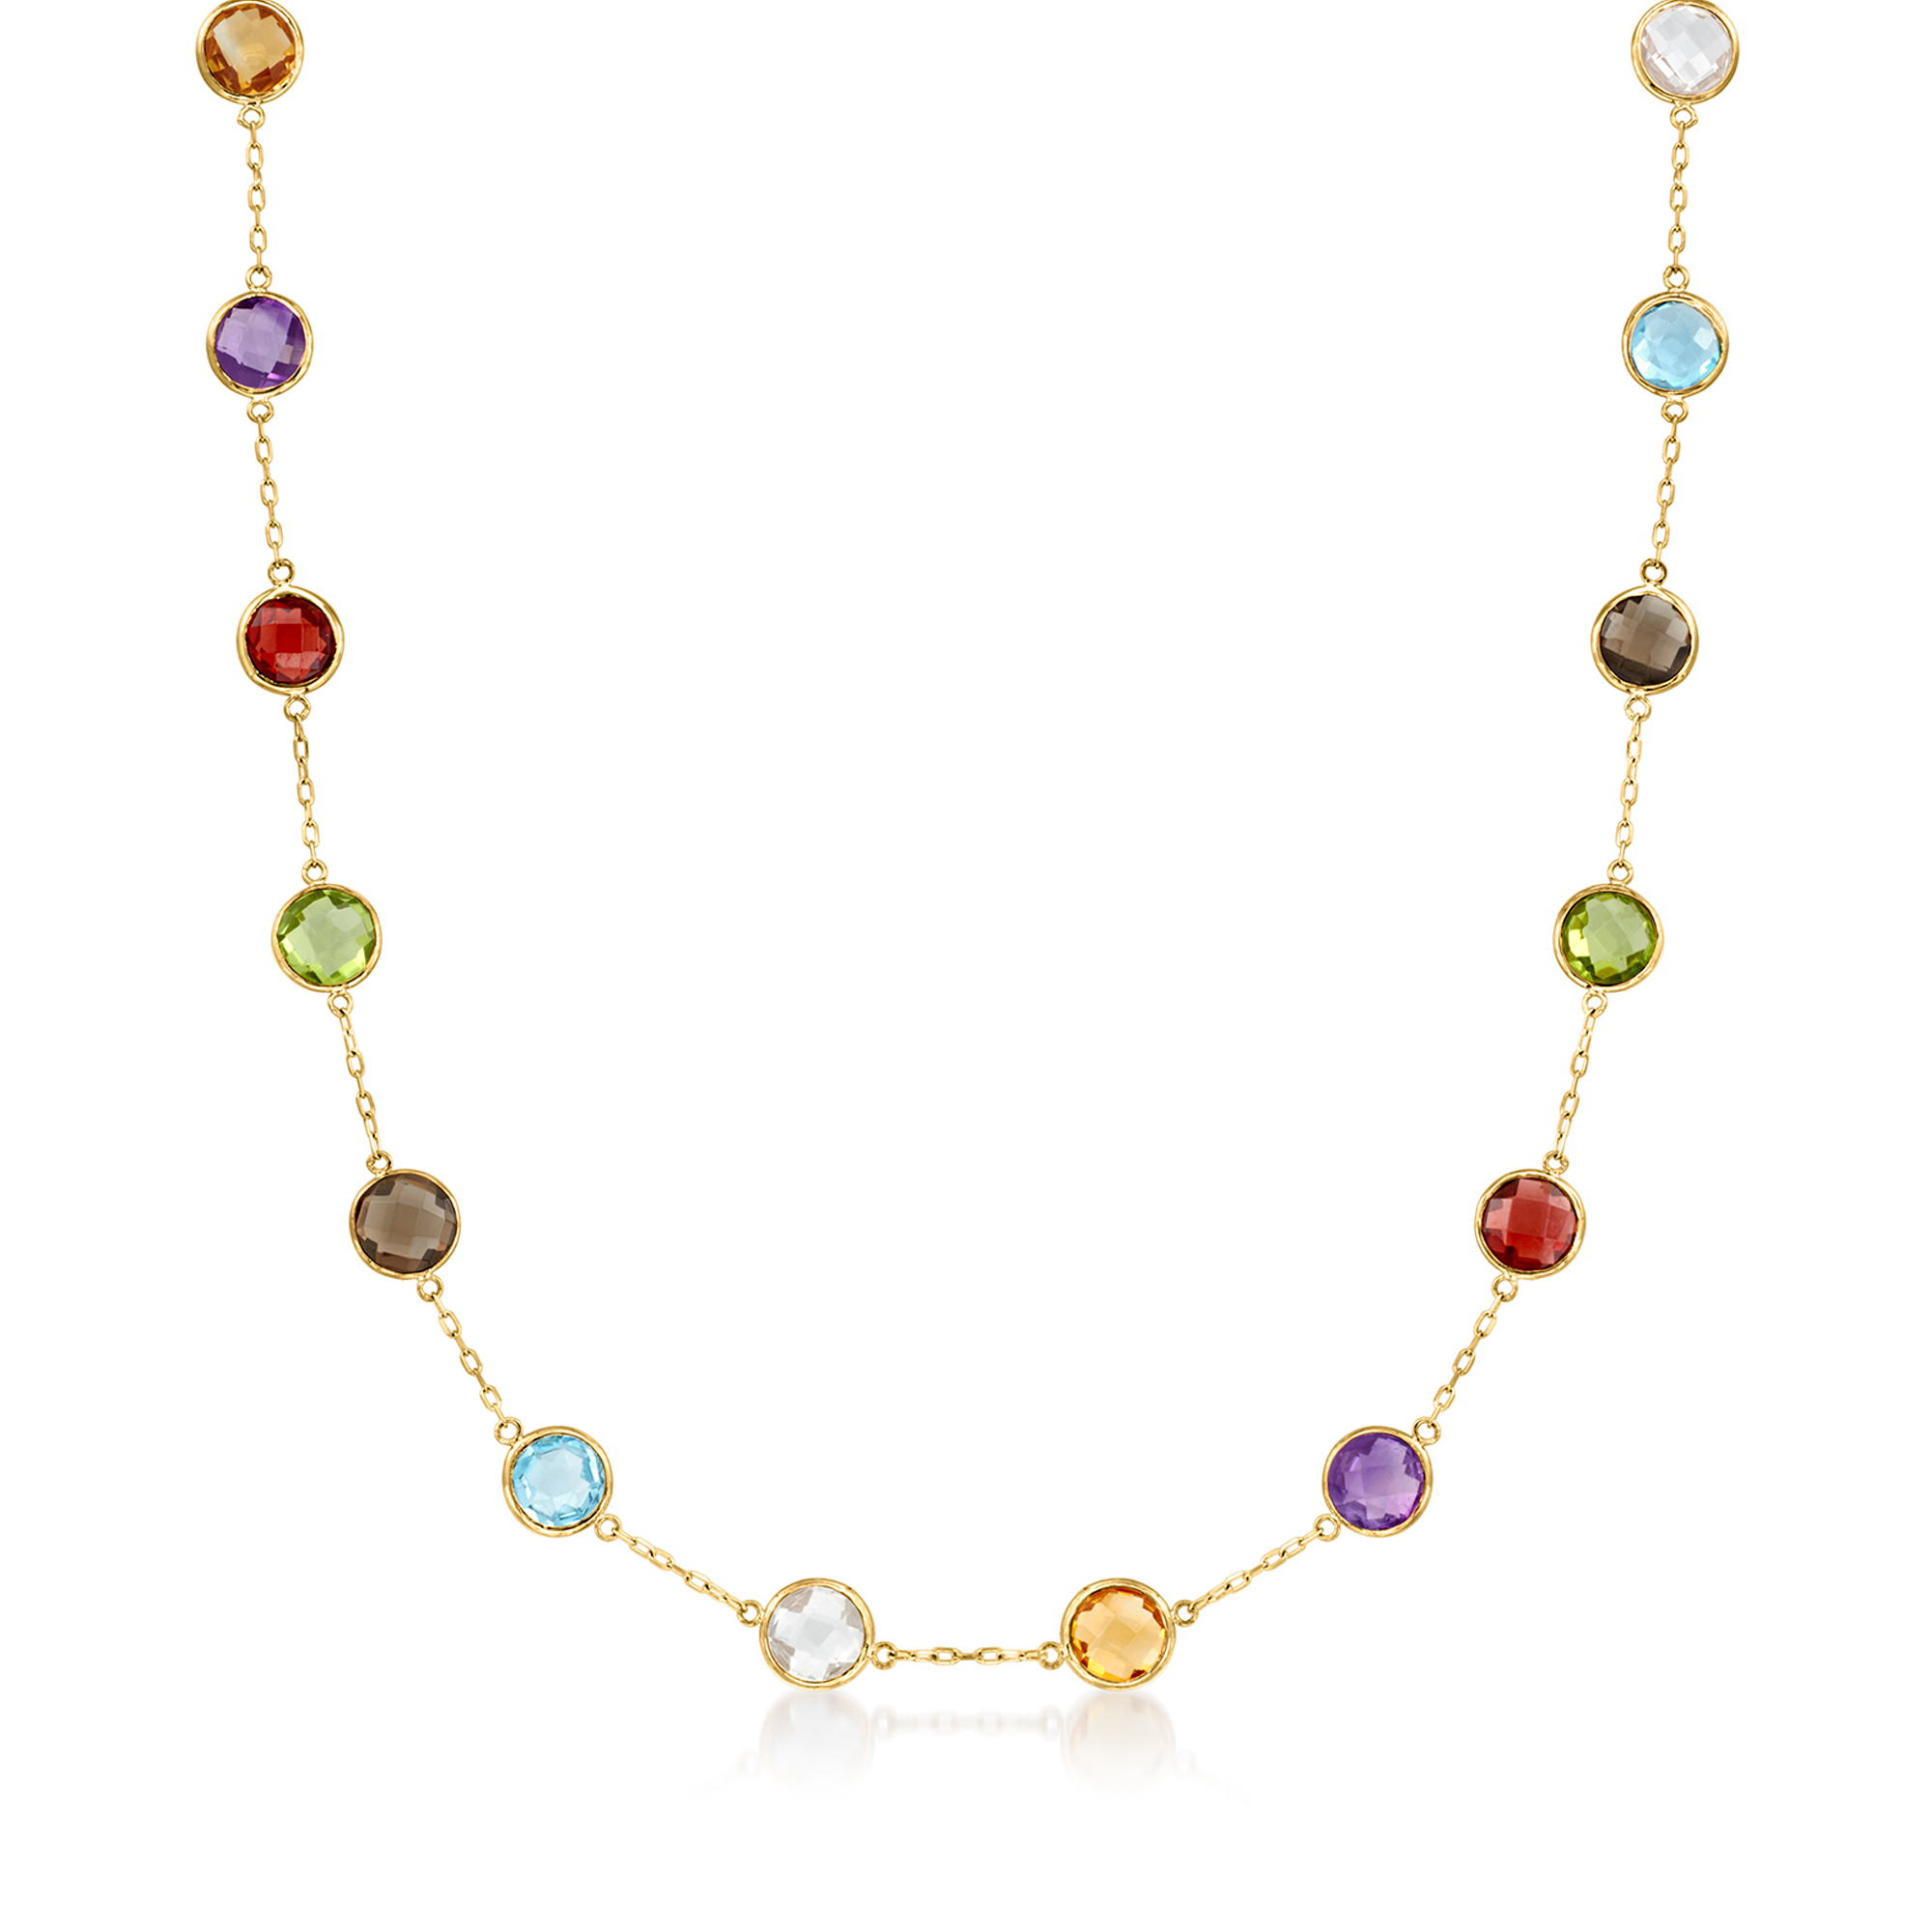 Handmade Gemstone Jewellery - Gifts for Women - Poppy Jewellery